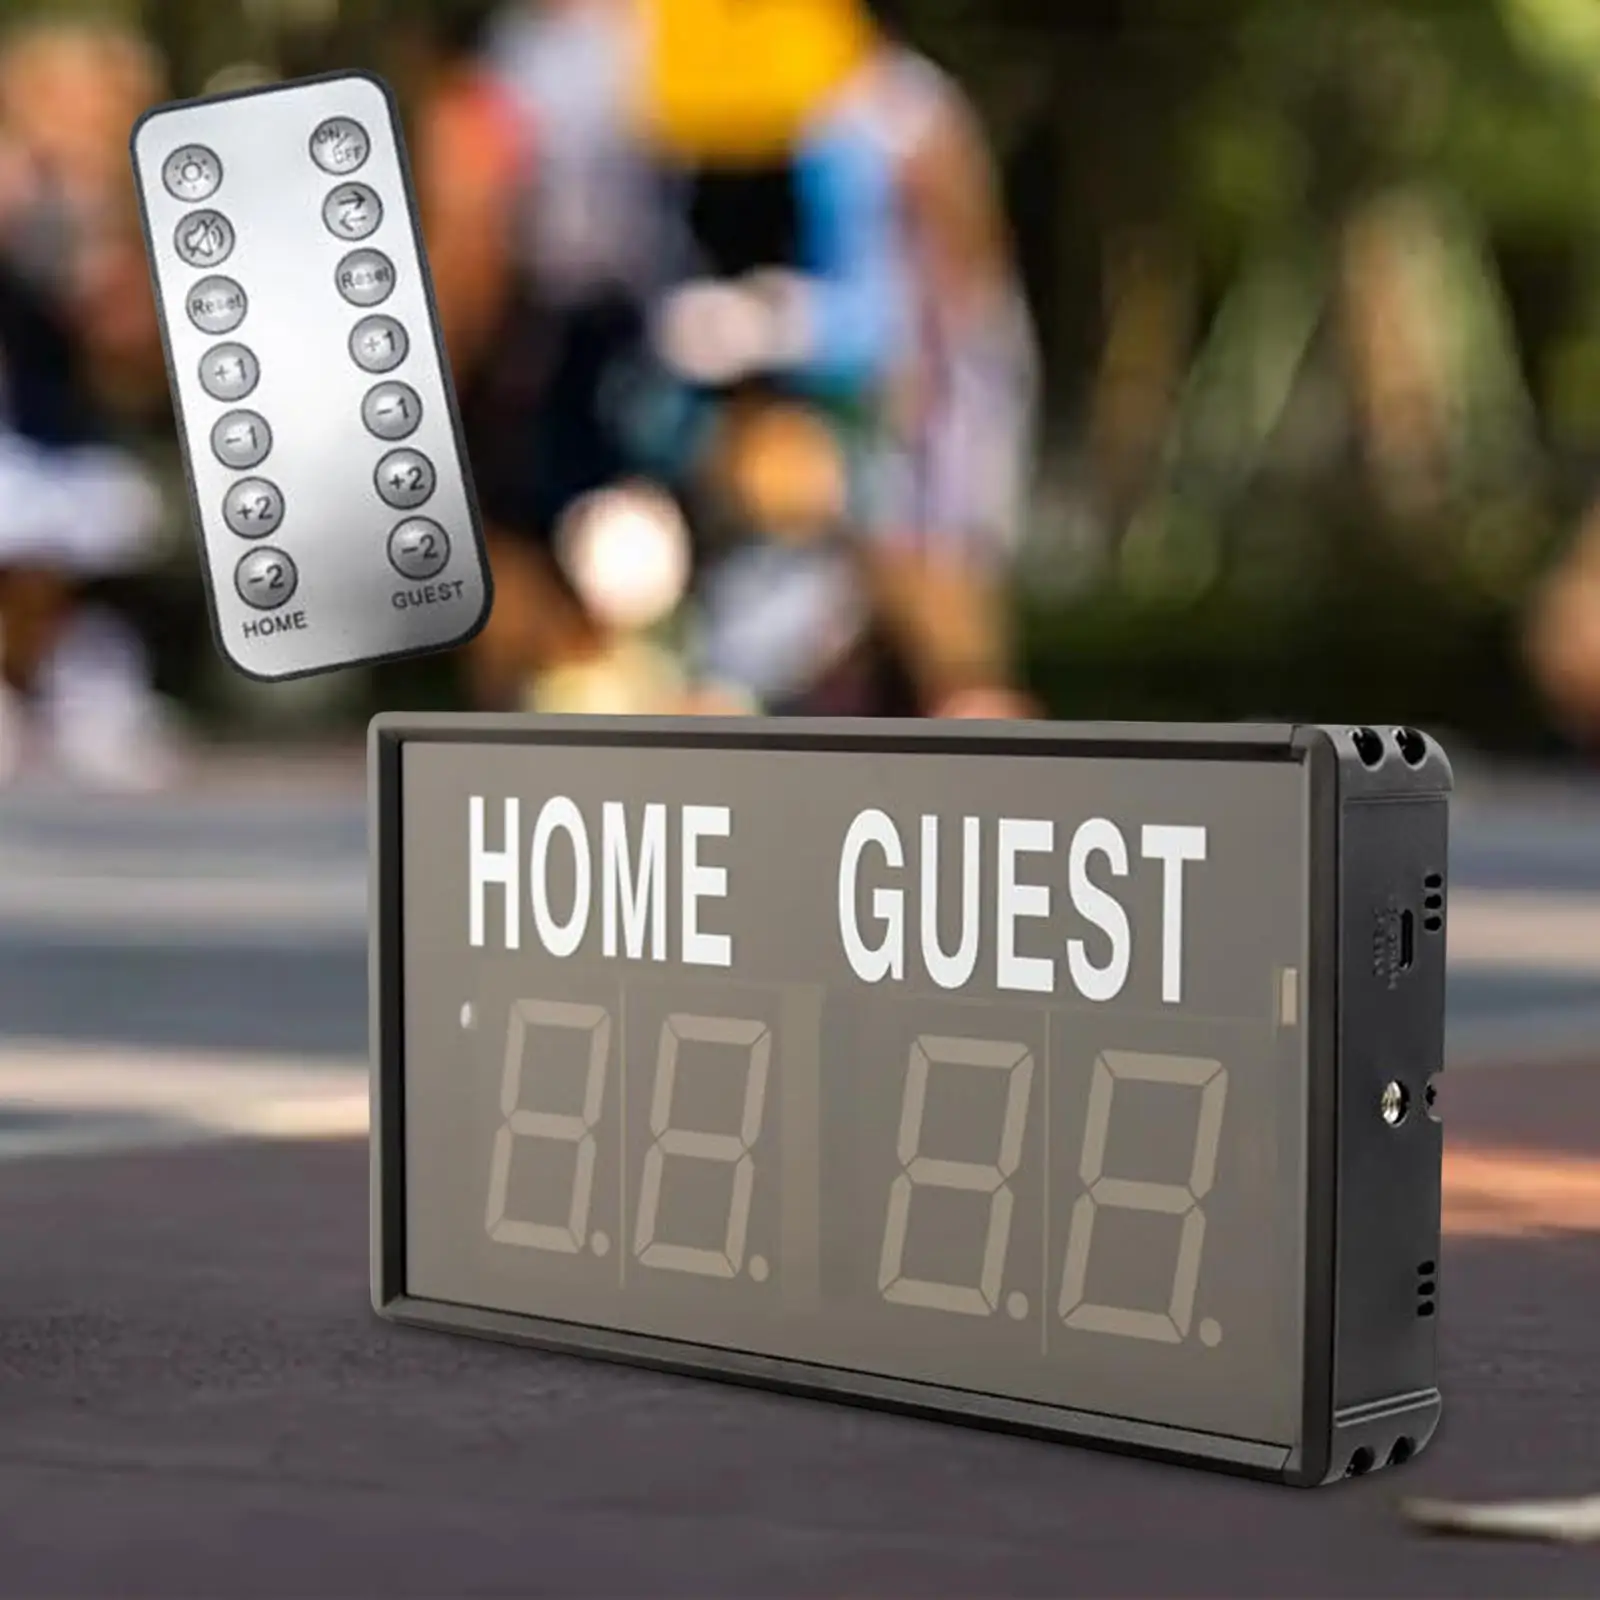 Electronic Scoreboard Scoring Mini Digital Scoreboard Tabletop Score Keeper for Volleyball Football Cornhole Soccer Competition